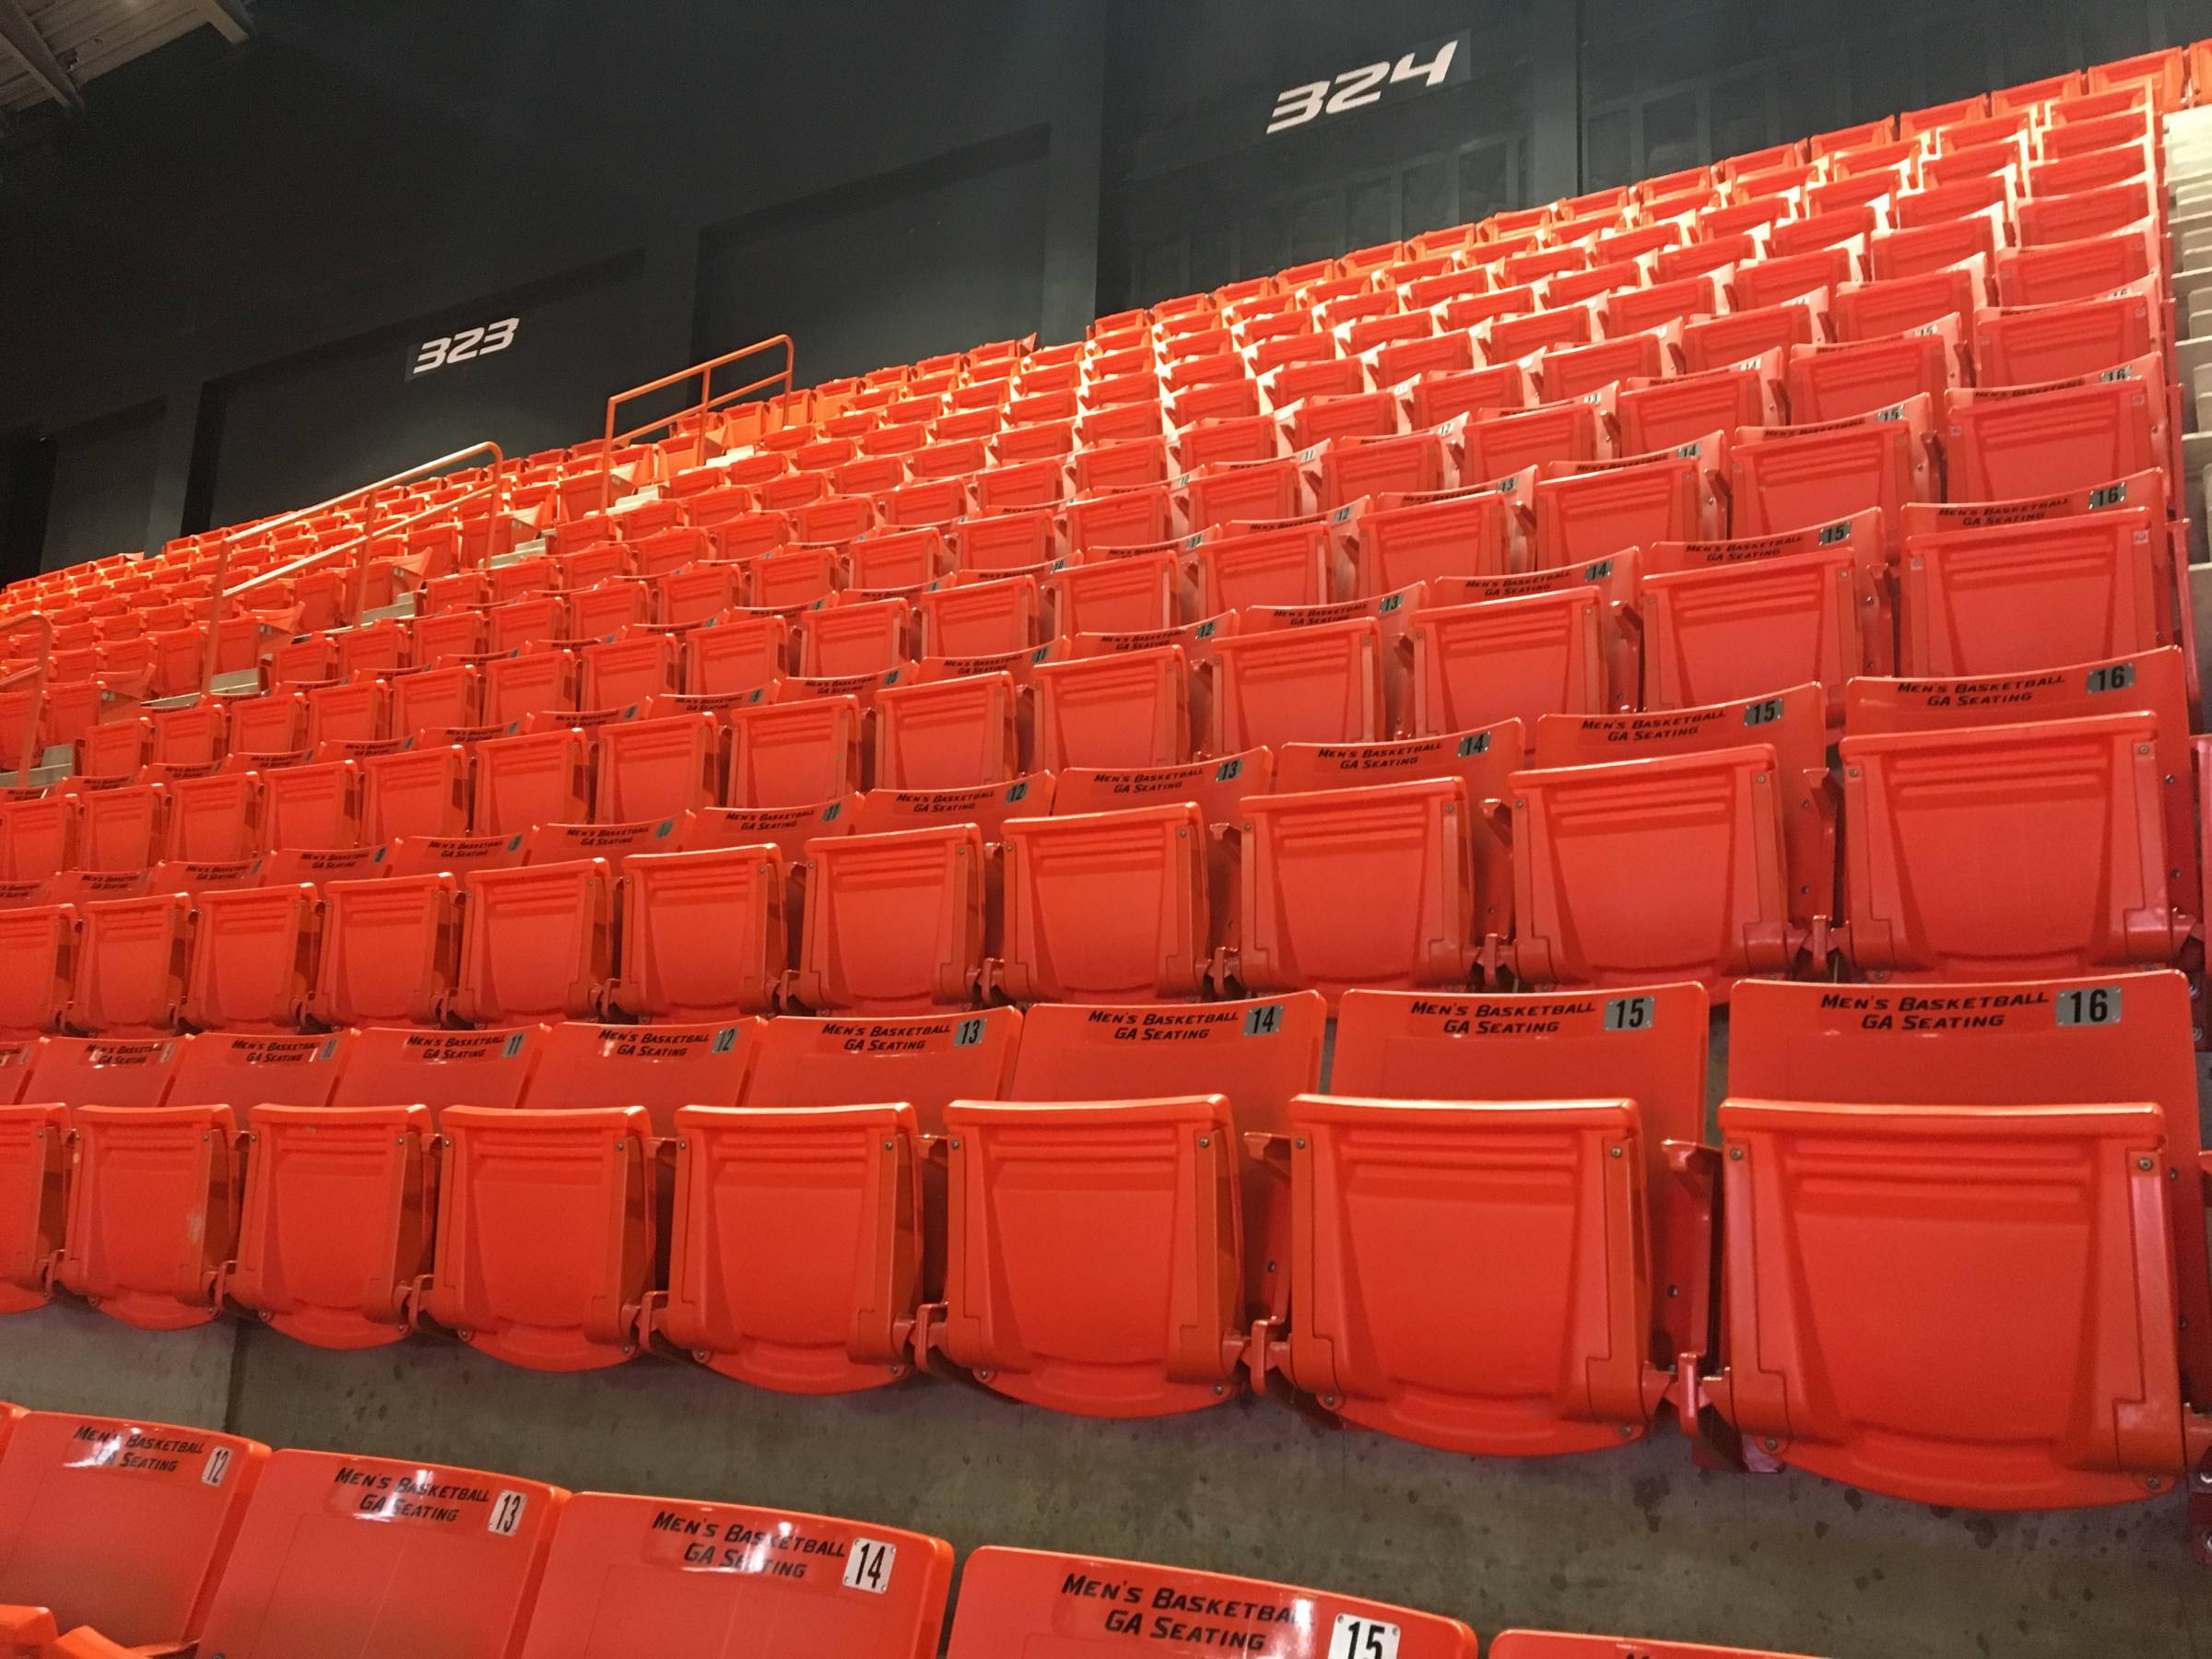 Men's Basketball GA Seating at Gallagher-Iba Arena